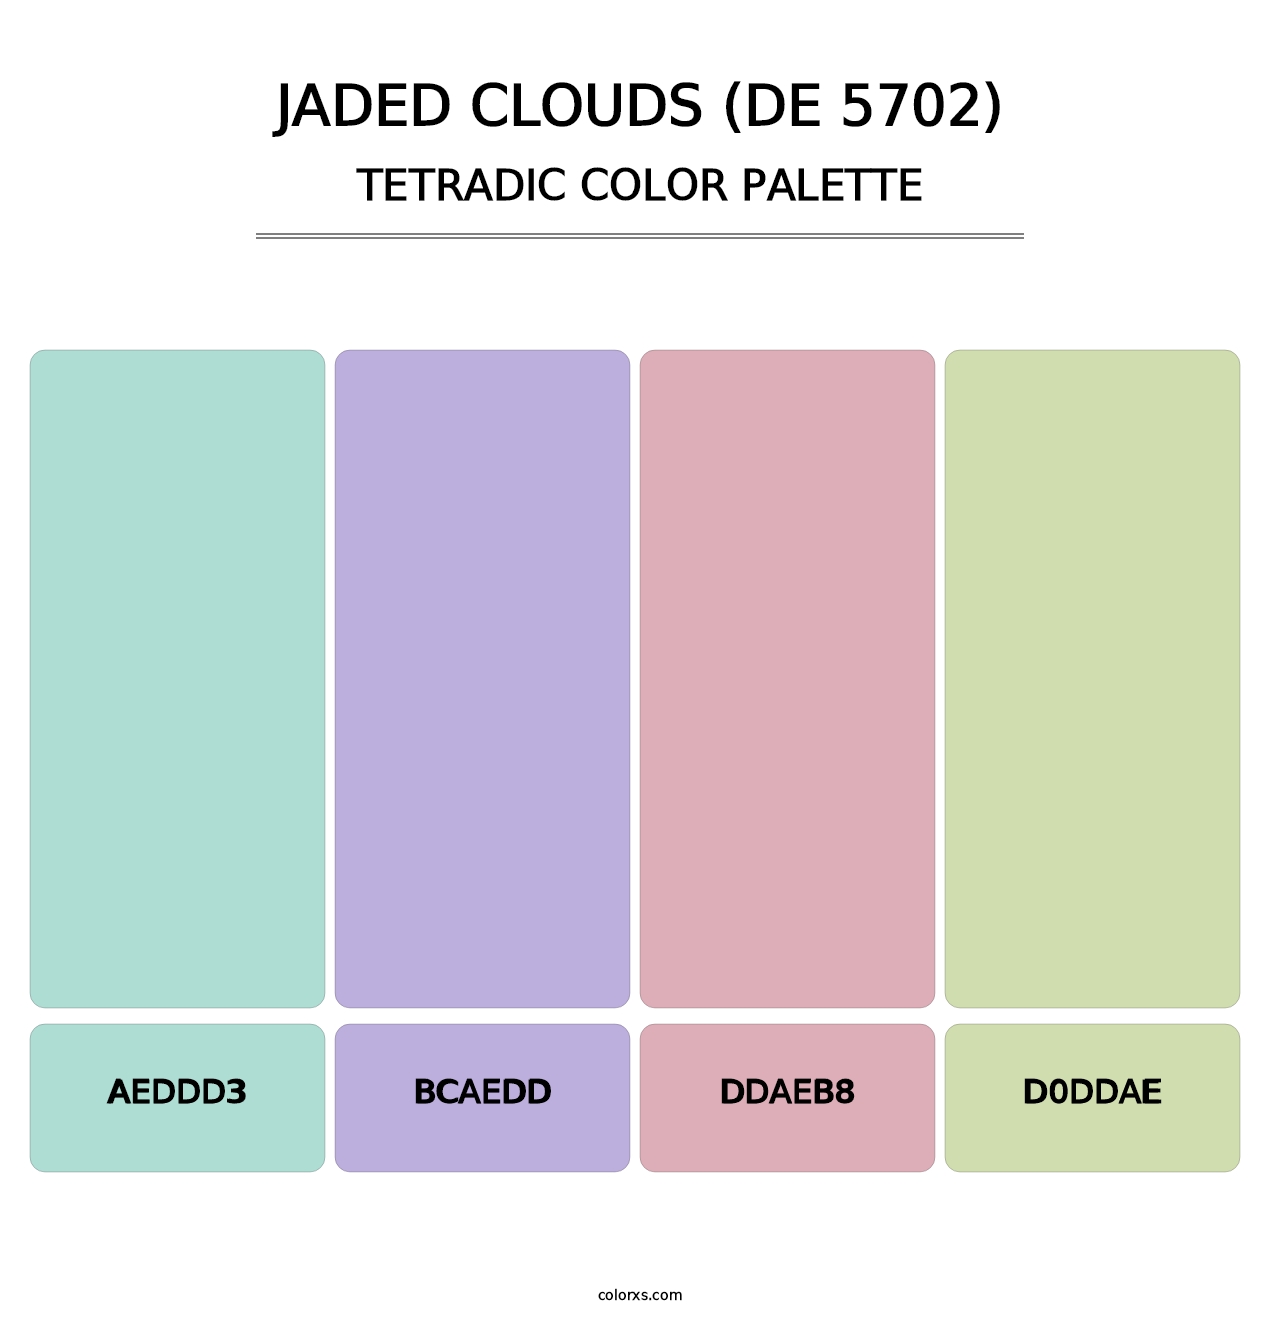 Jaded Clouds (DE 5702) - Tetradic Color Palette